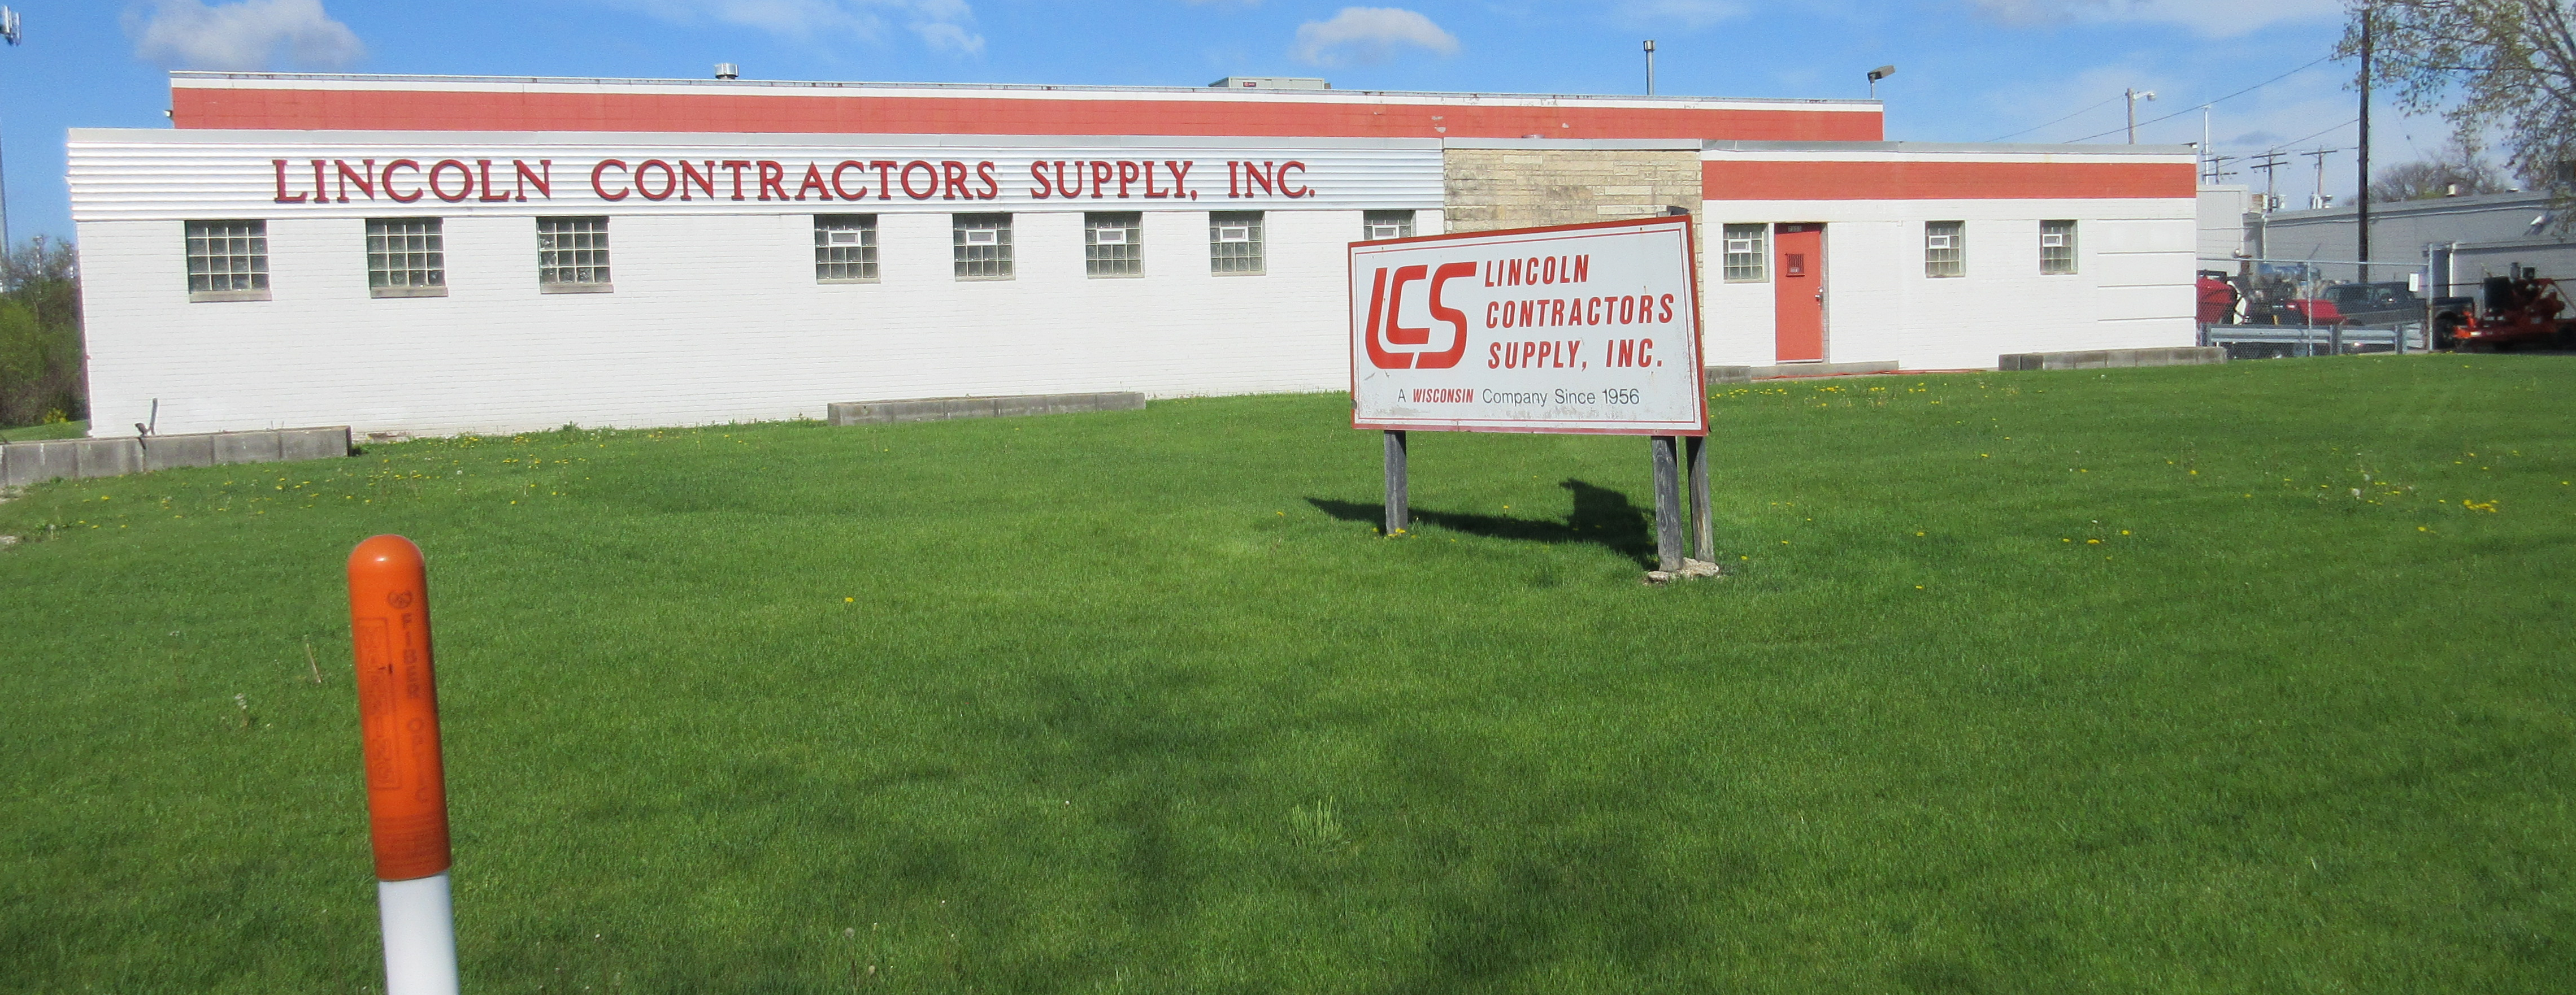 Lincoln Contractors Supply, Inc. Photo